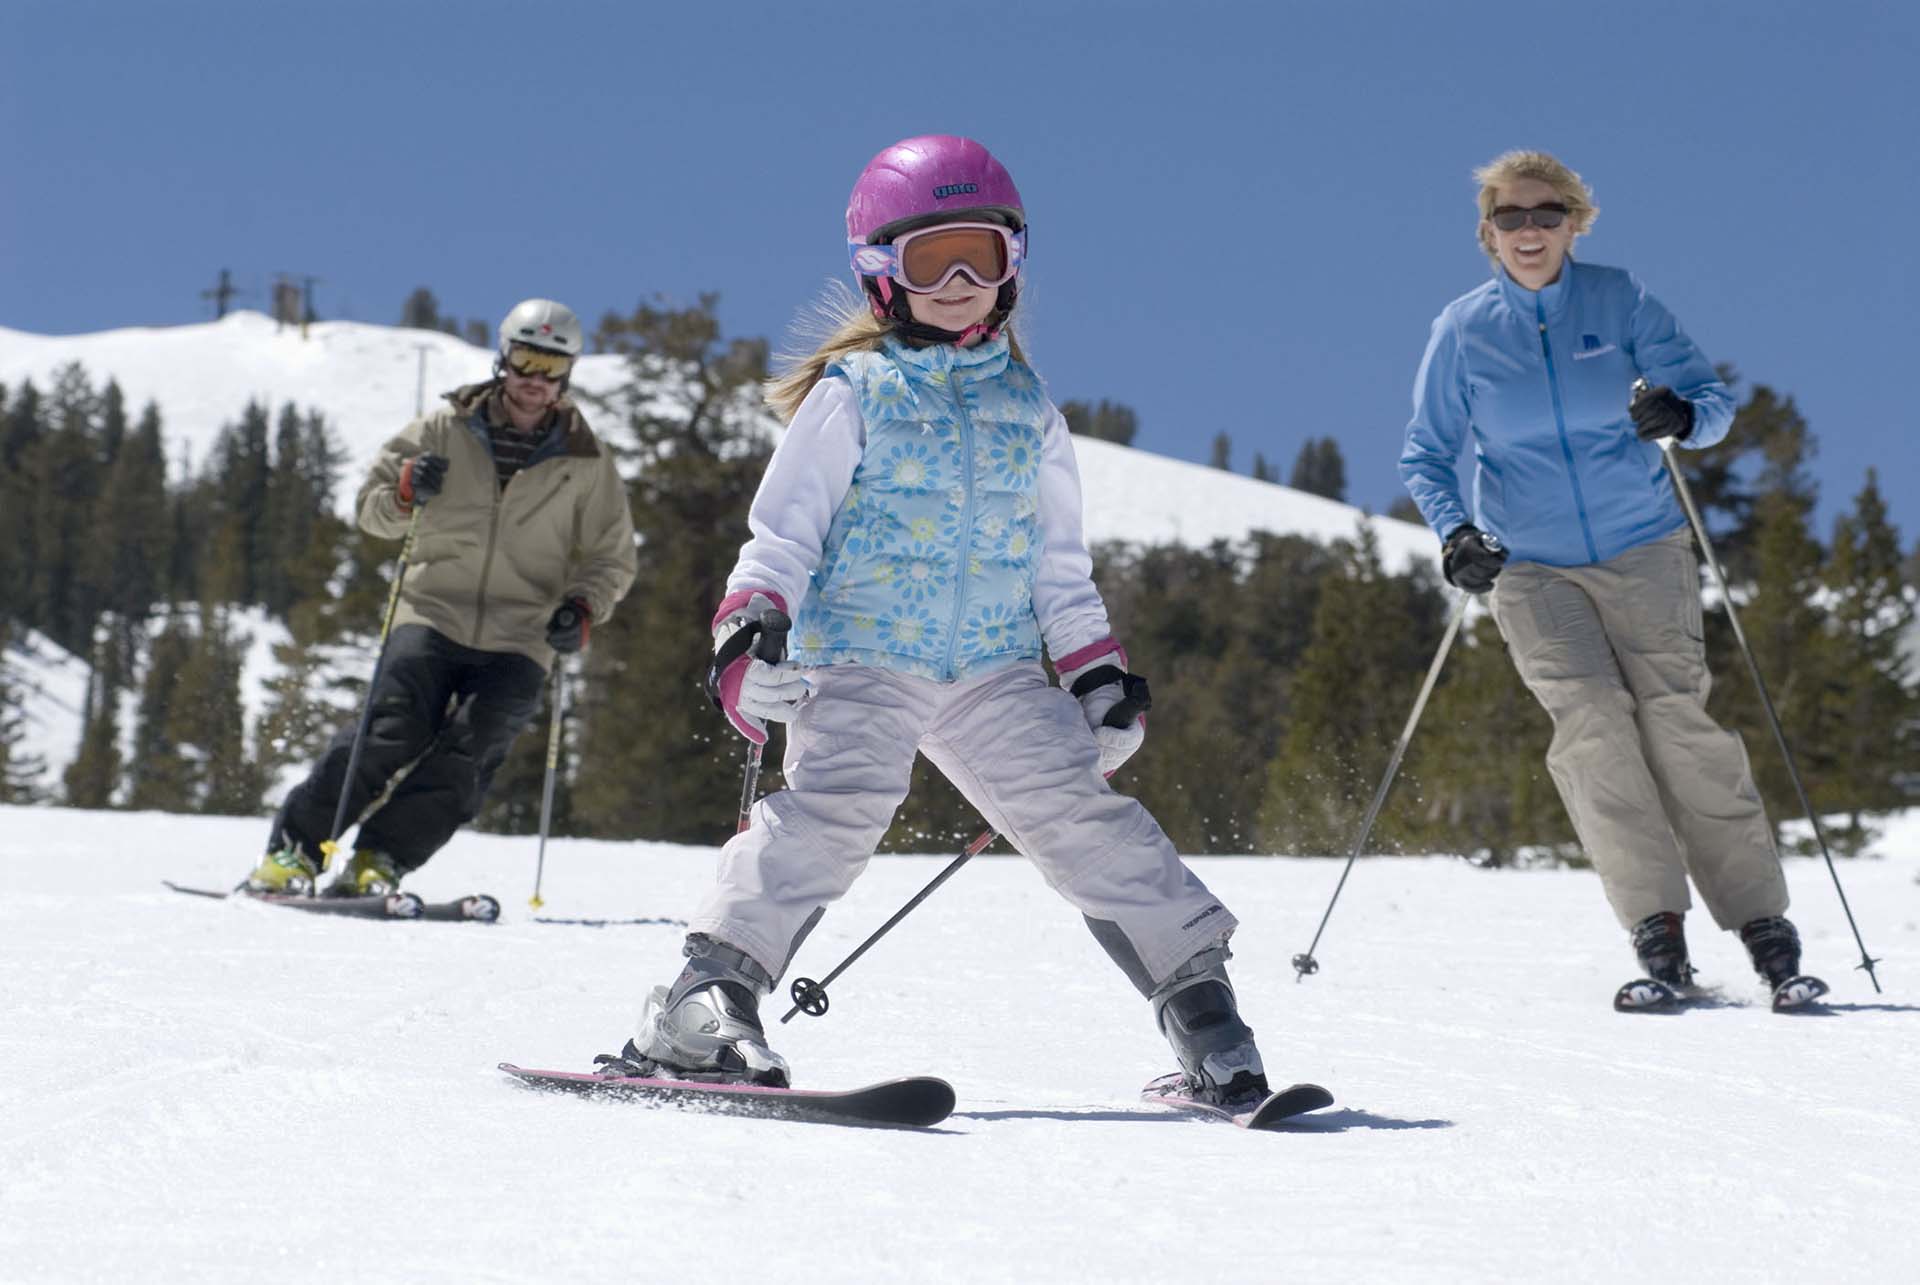 pratica de esqui no lee canyon snowboarding las vegas ski resort